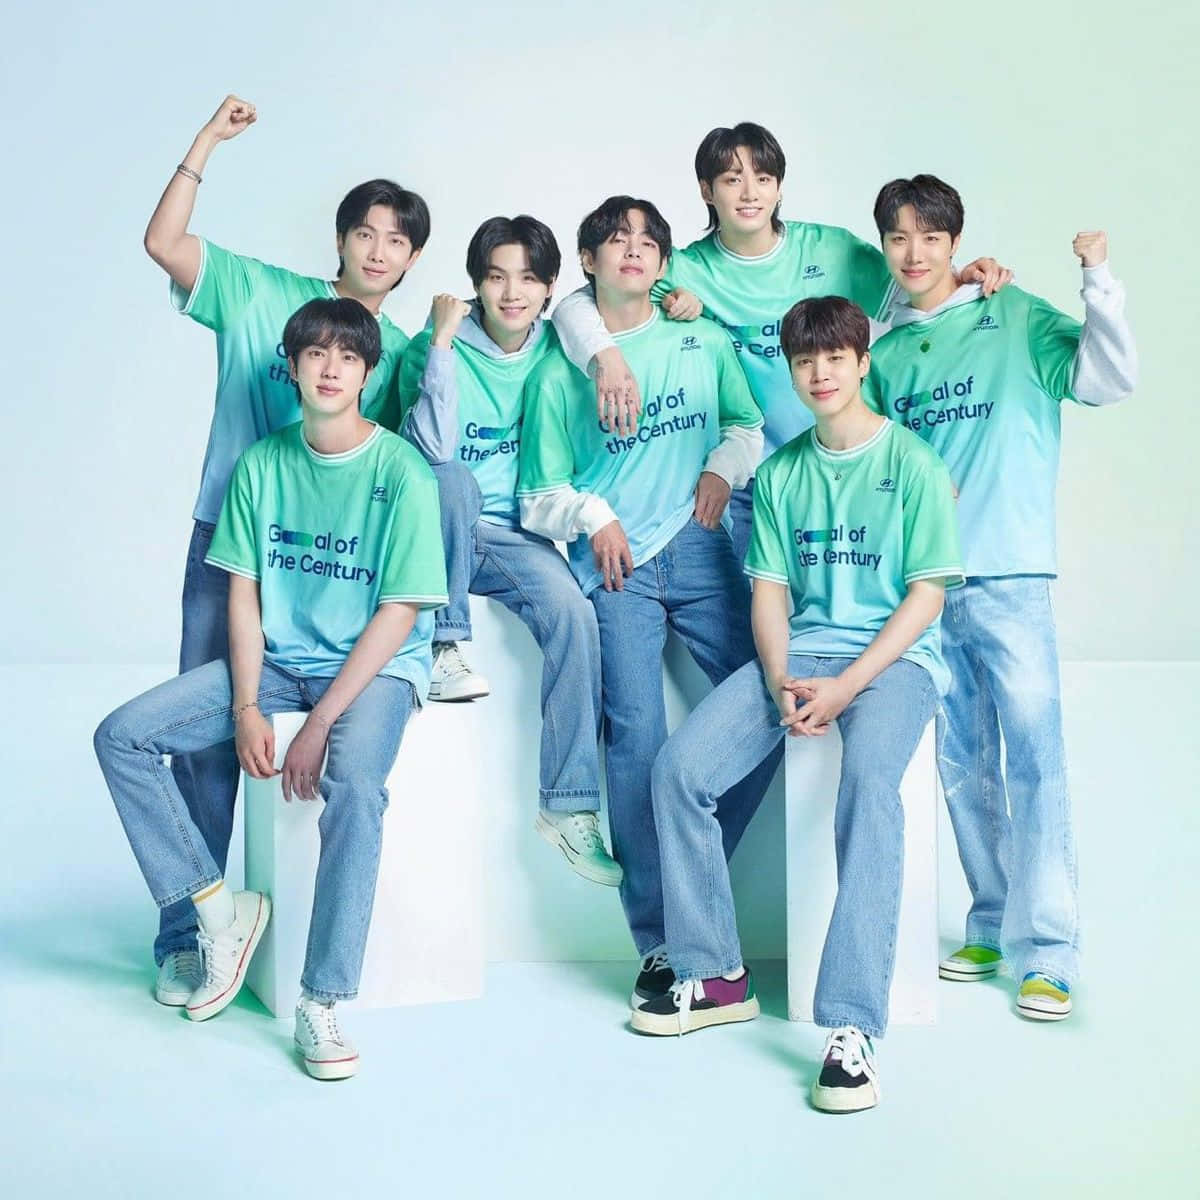 BTS posing together at an endorsement event Wallpaper